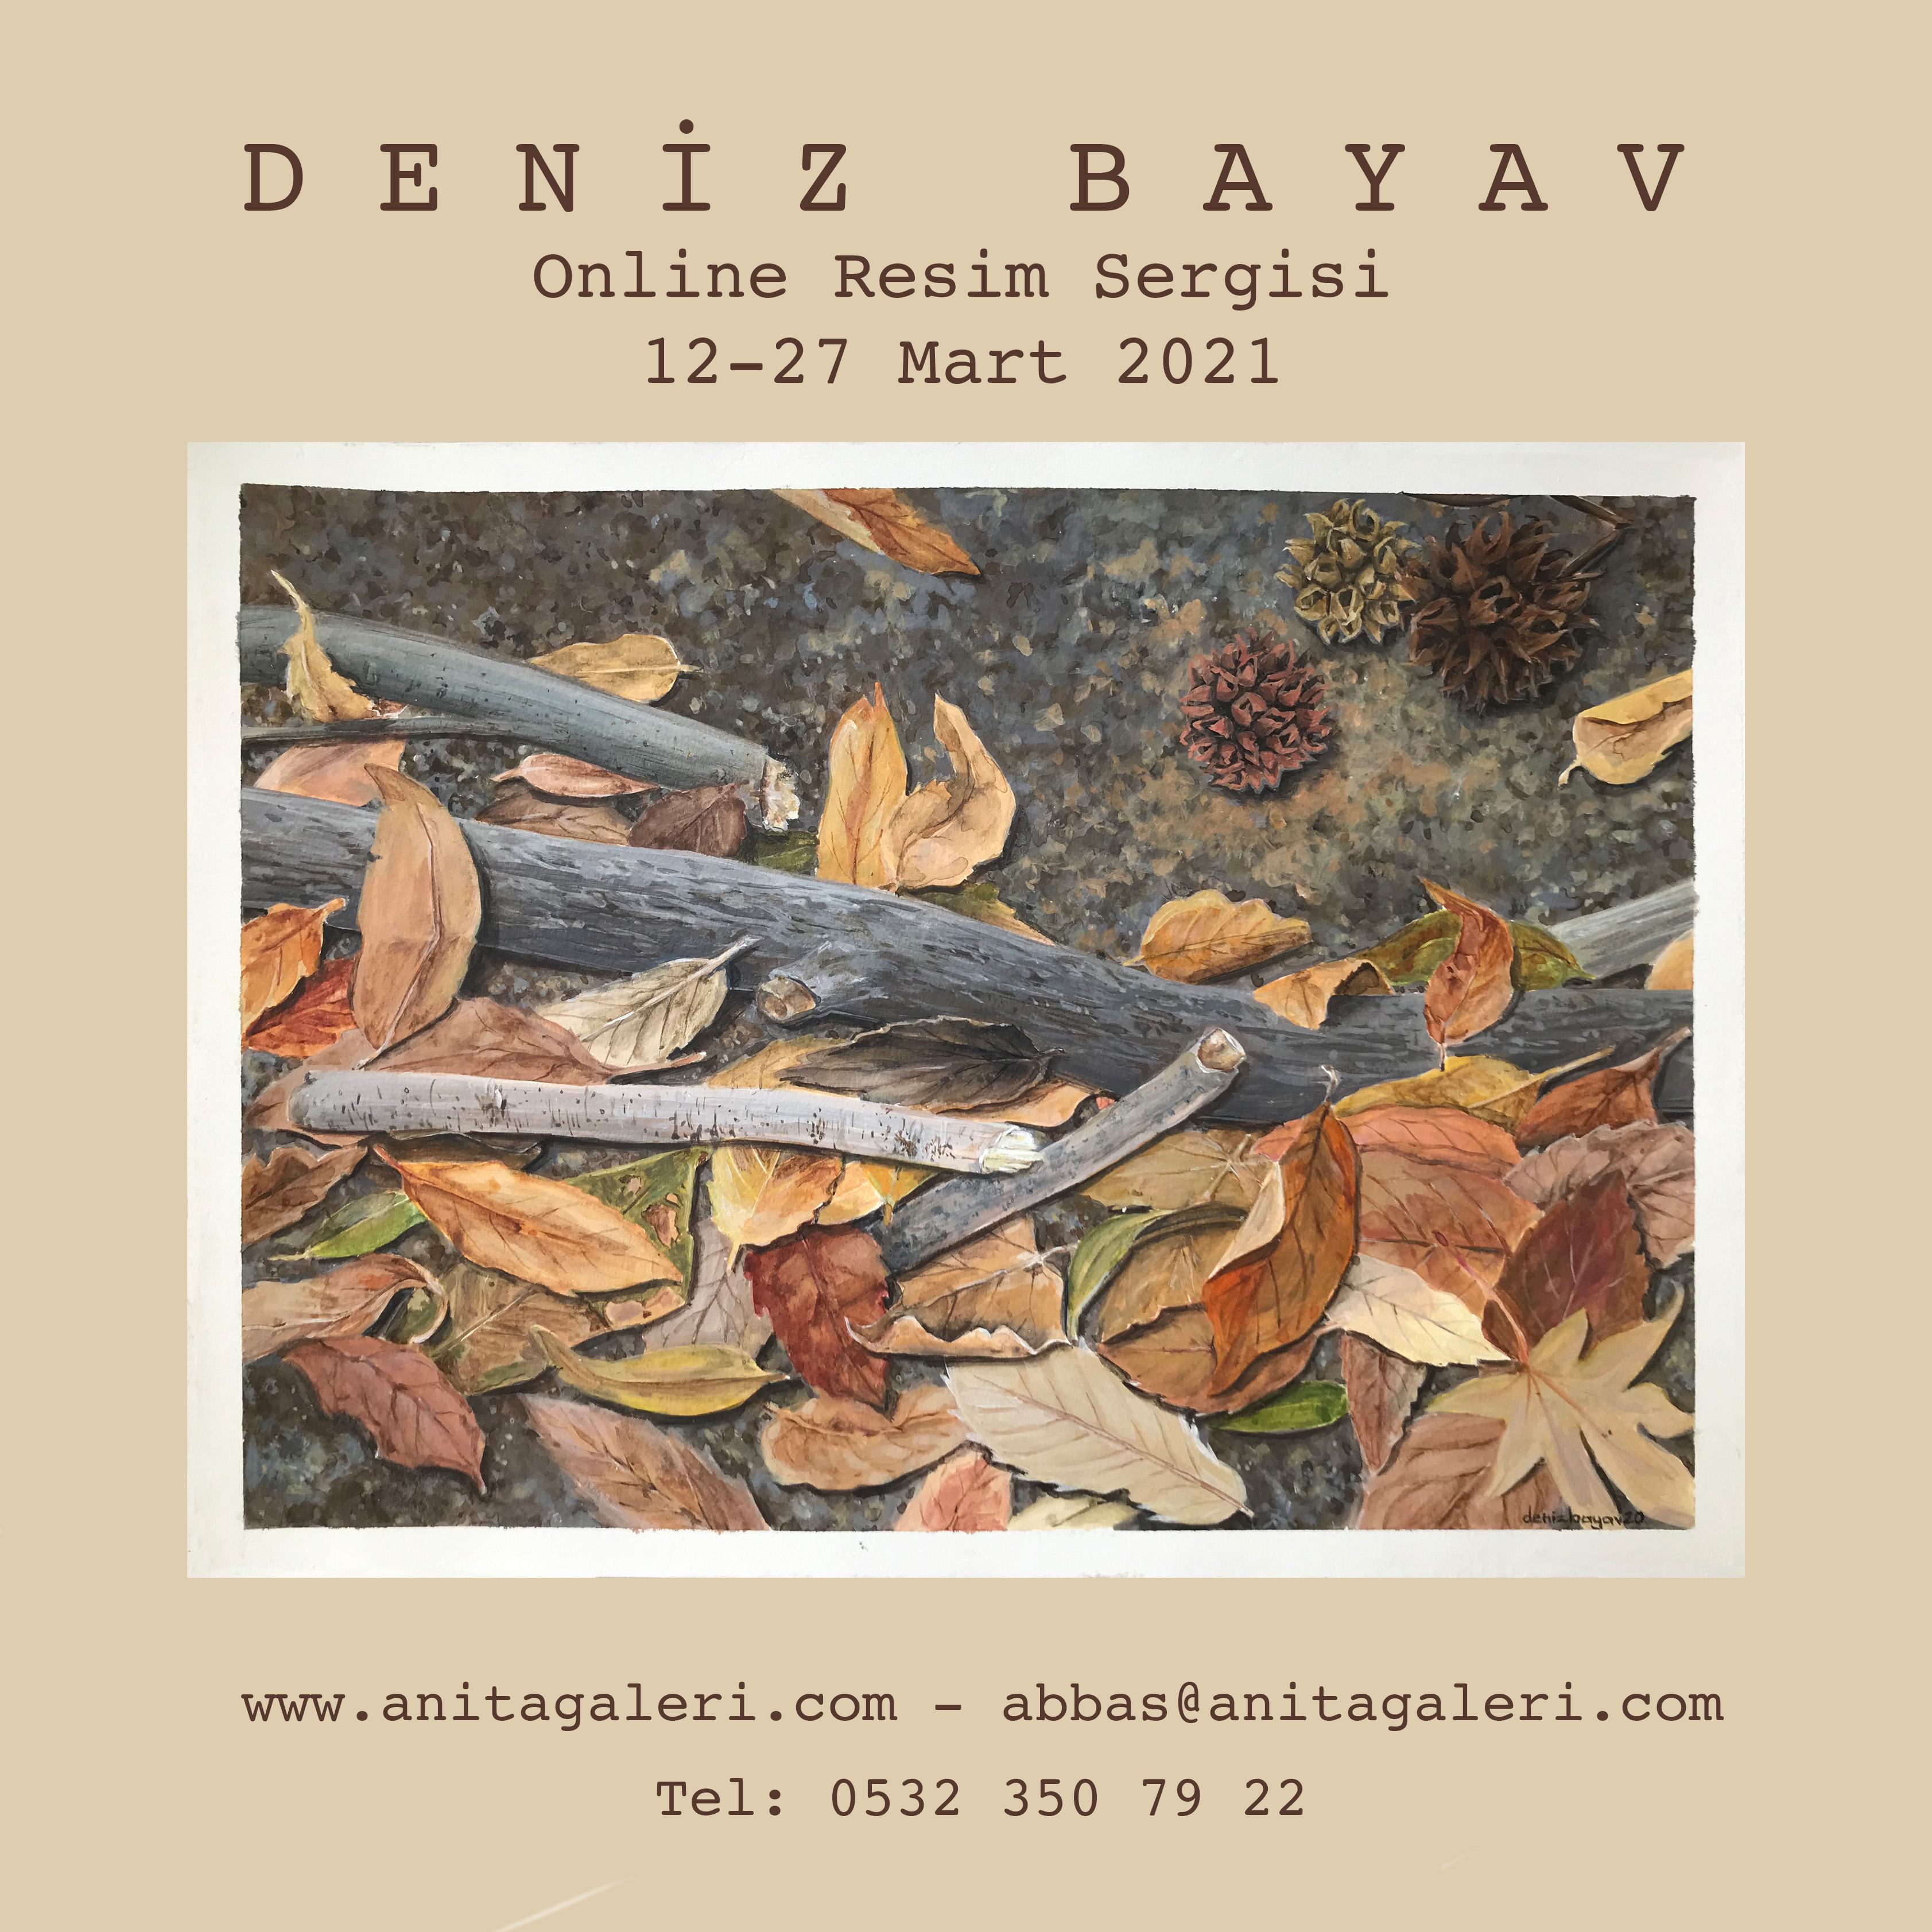 Deniz Bayav Online Resim Sergisi 12 - 27 Mart 2021